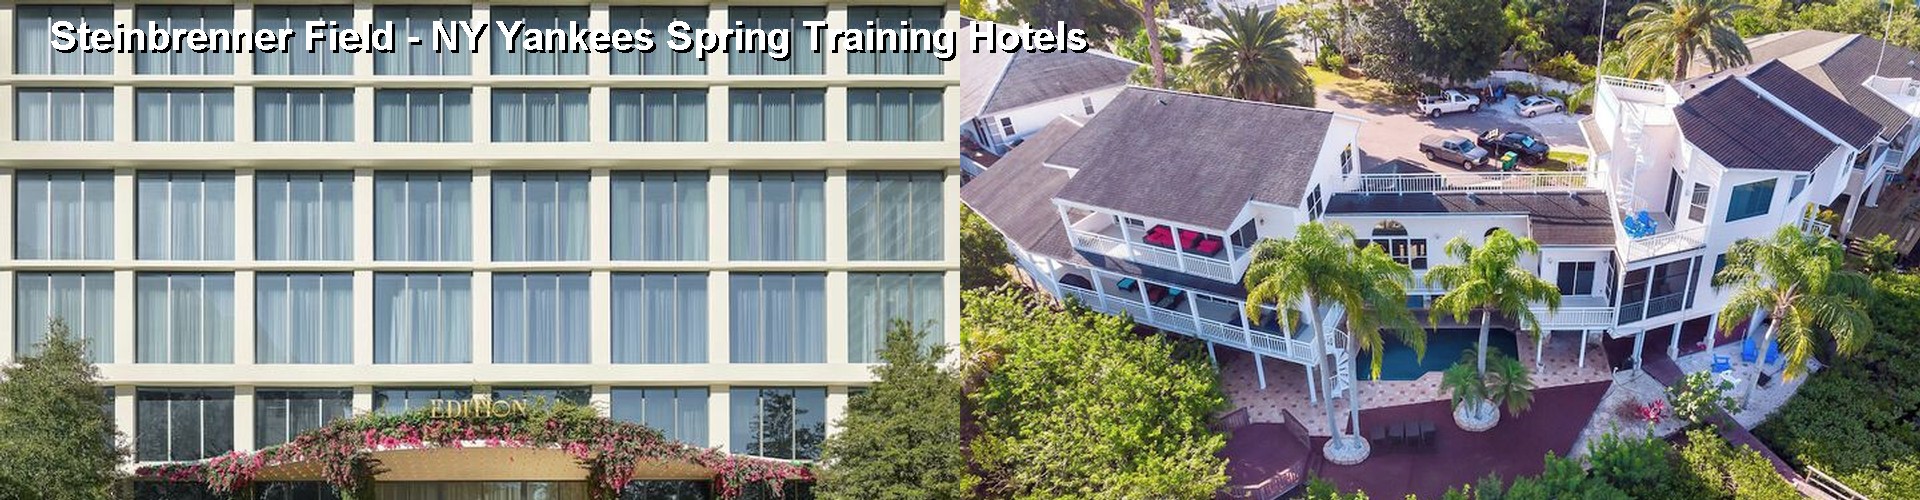 3 Best Hotels near Steinbrenner Field - NY Yankees Spring Training